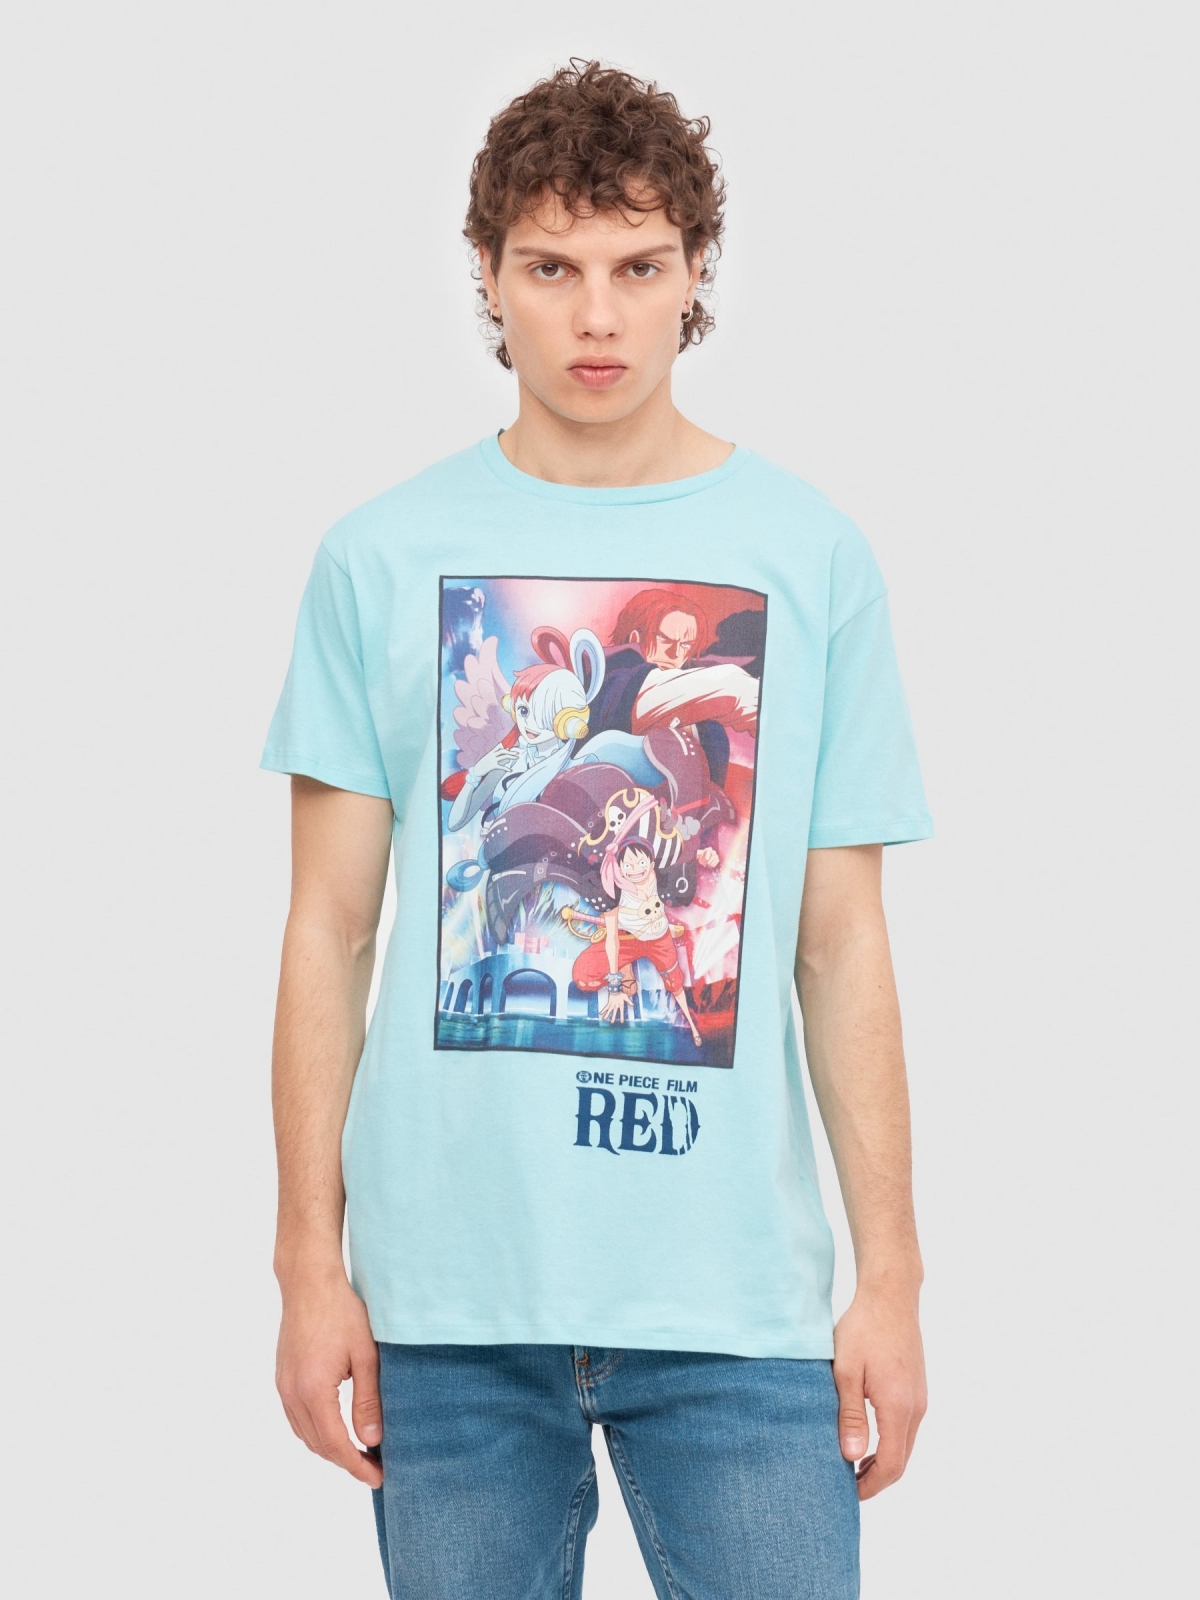 Camiseta One Piece Film azul claro vista media frontal